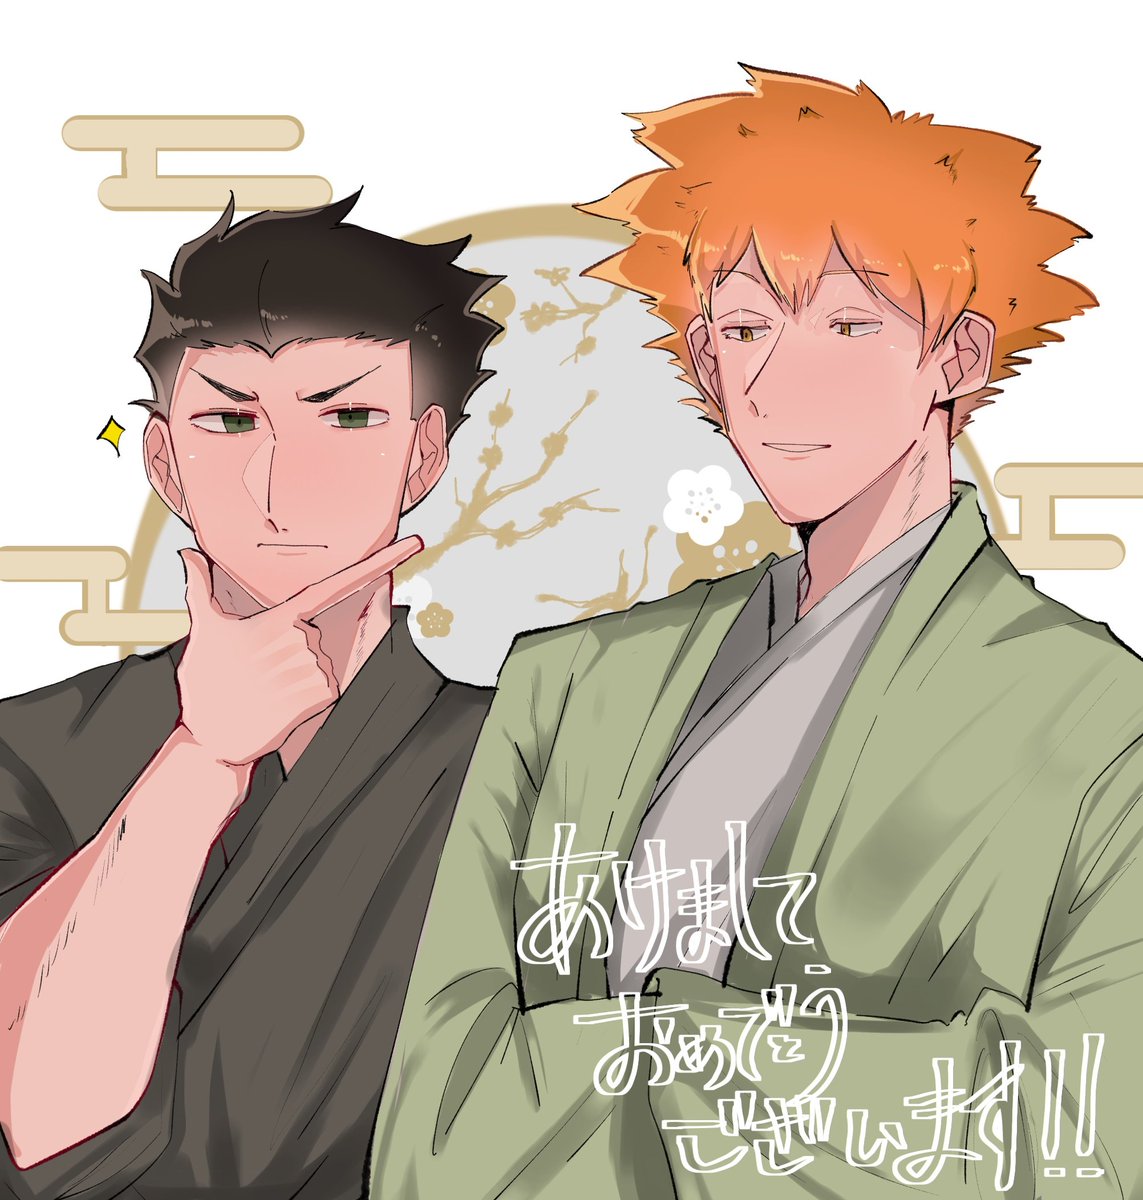 2boys multiple boys male focus orange hair japanese clothes spiked hair short hair  illustration images